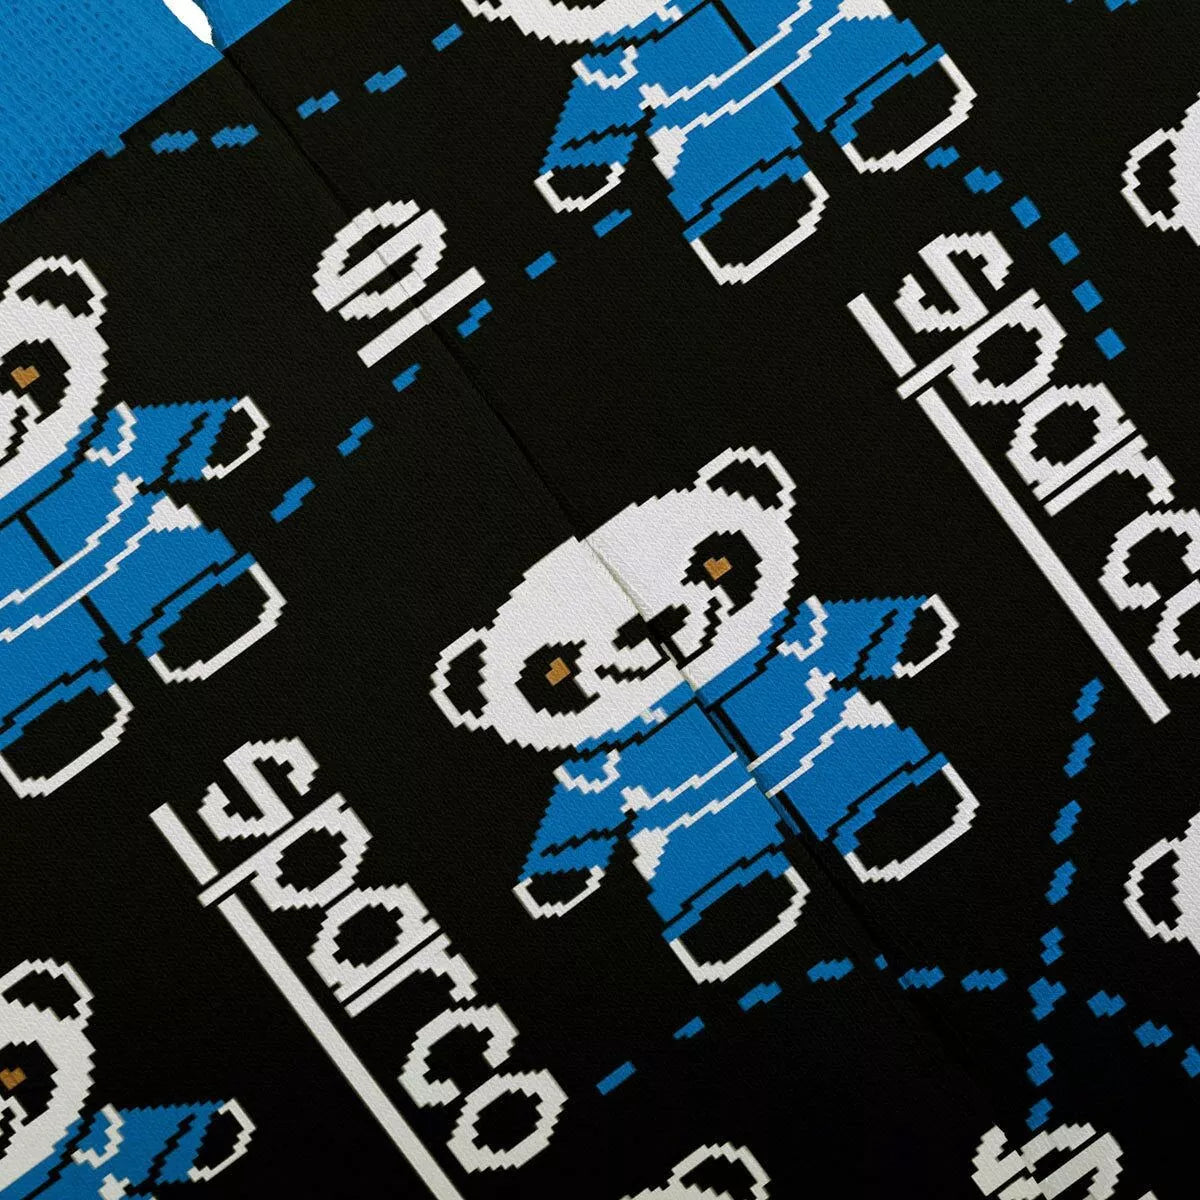 Sparco Panda-Socken